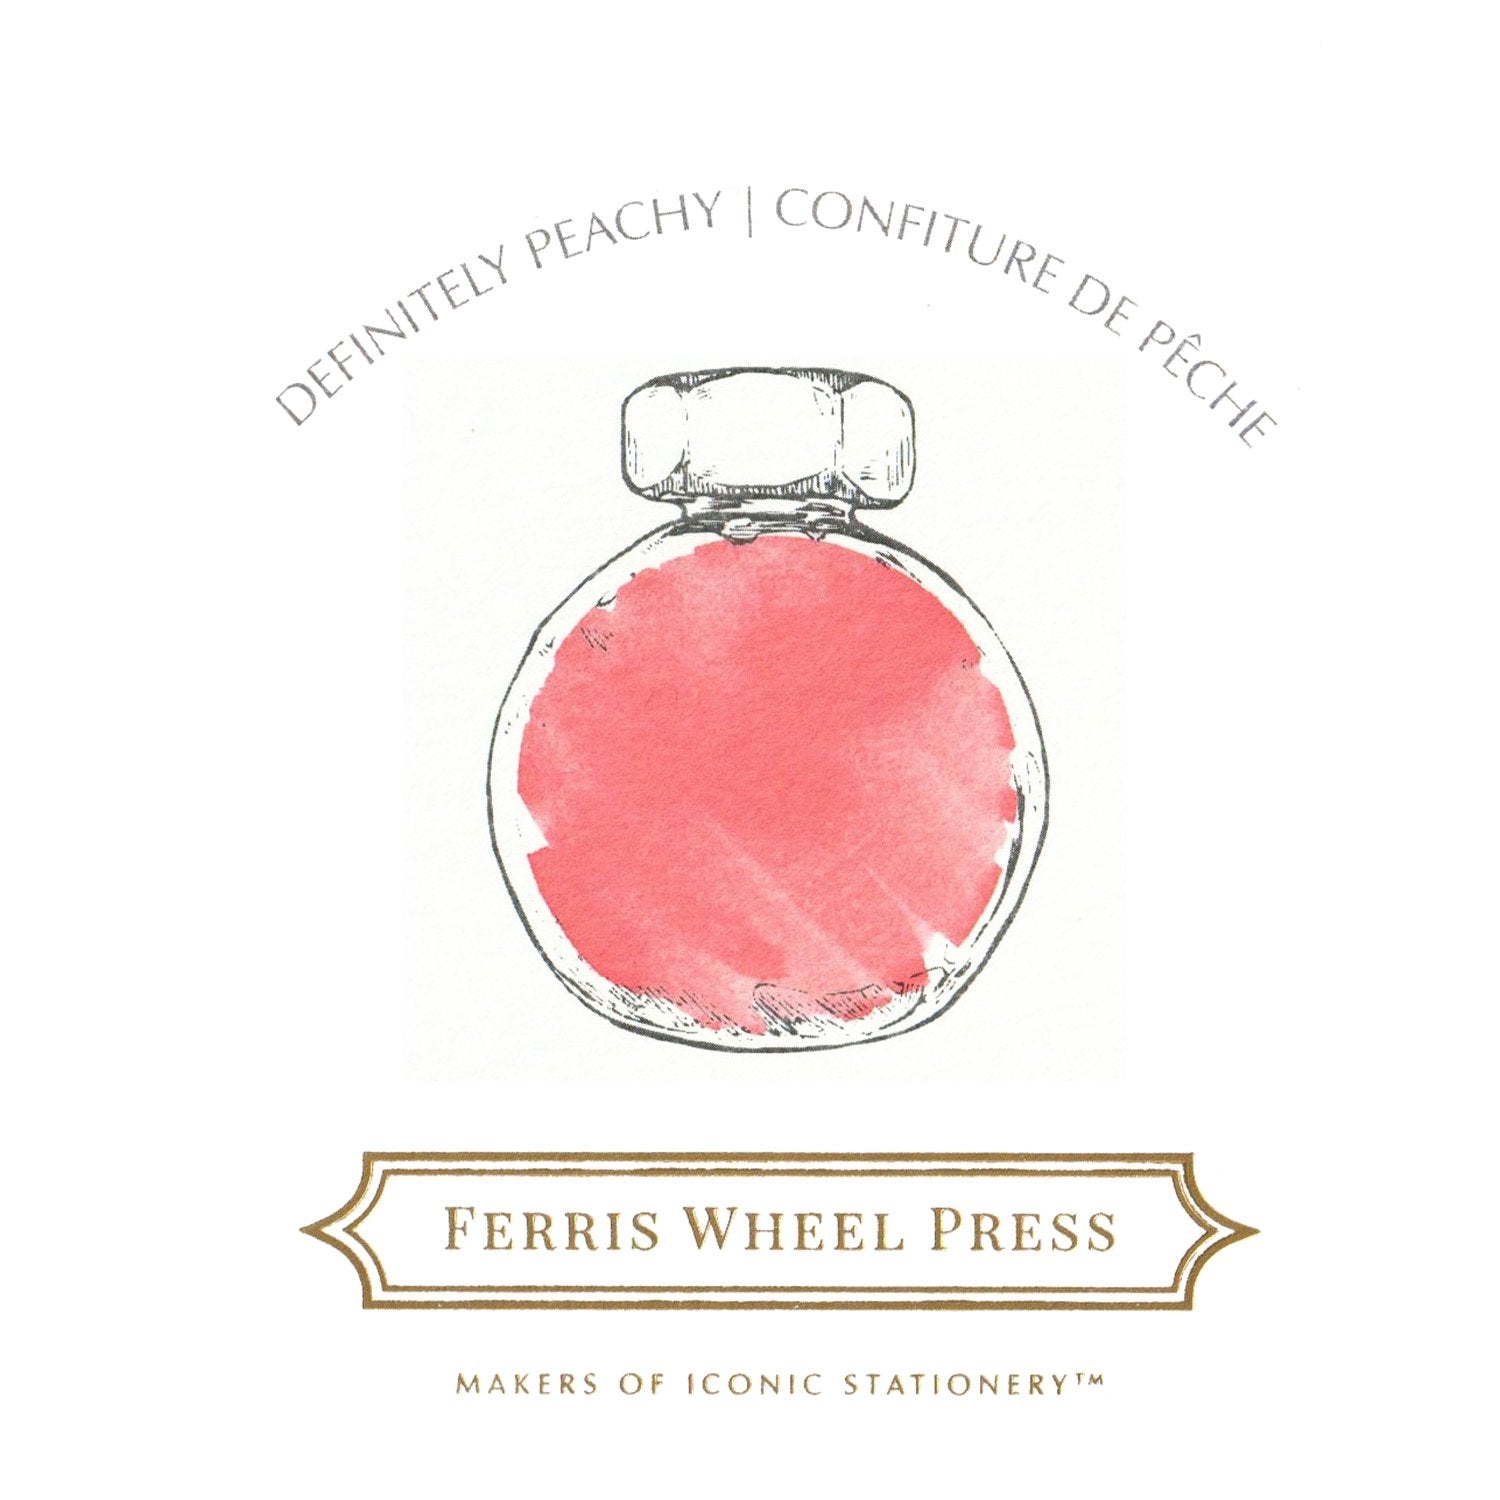 Definitely Peachy - Ferris Wheel Press